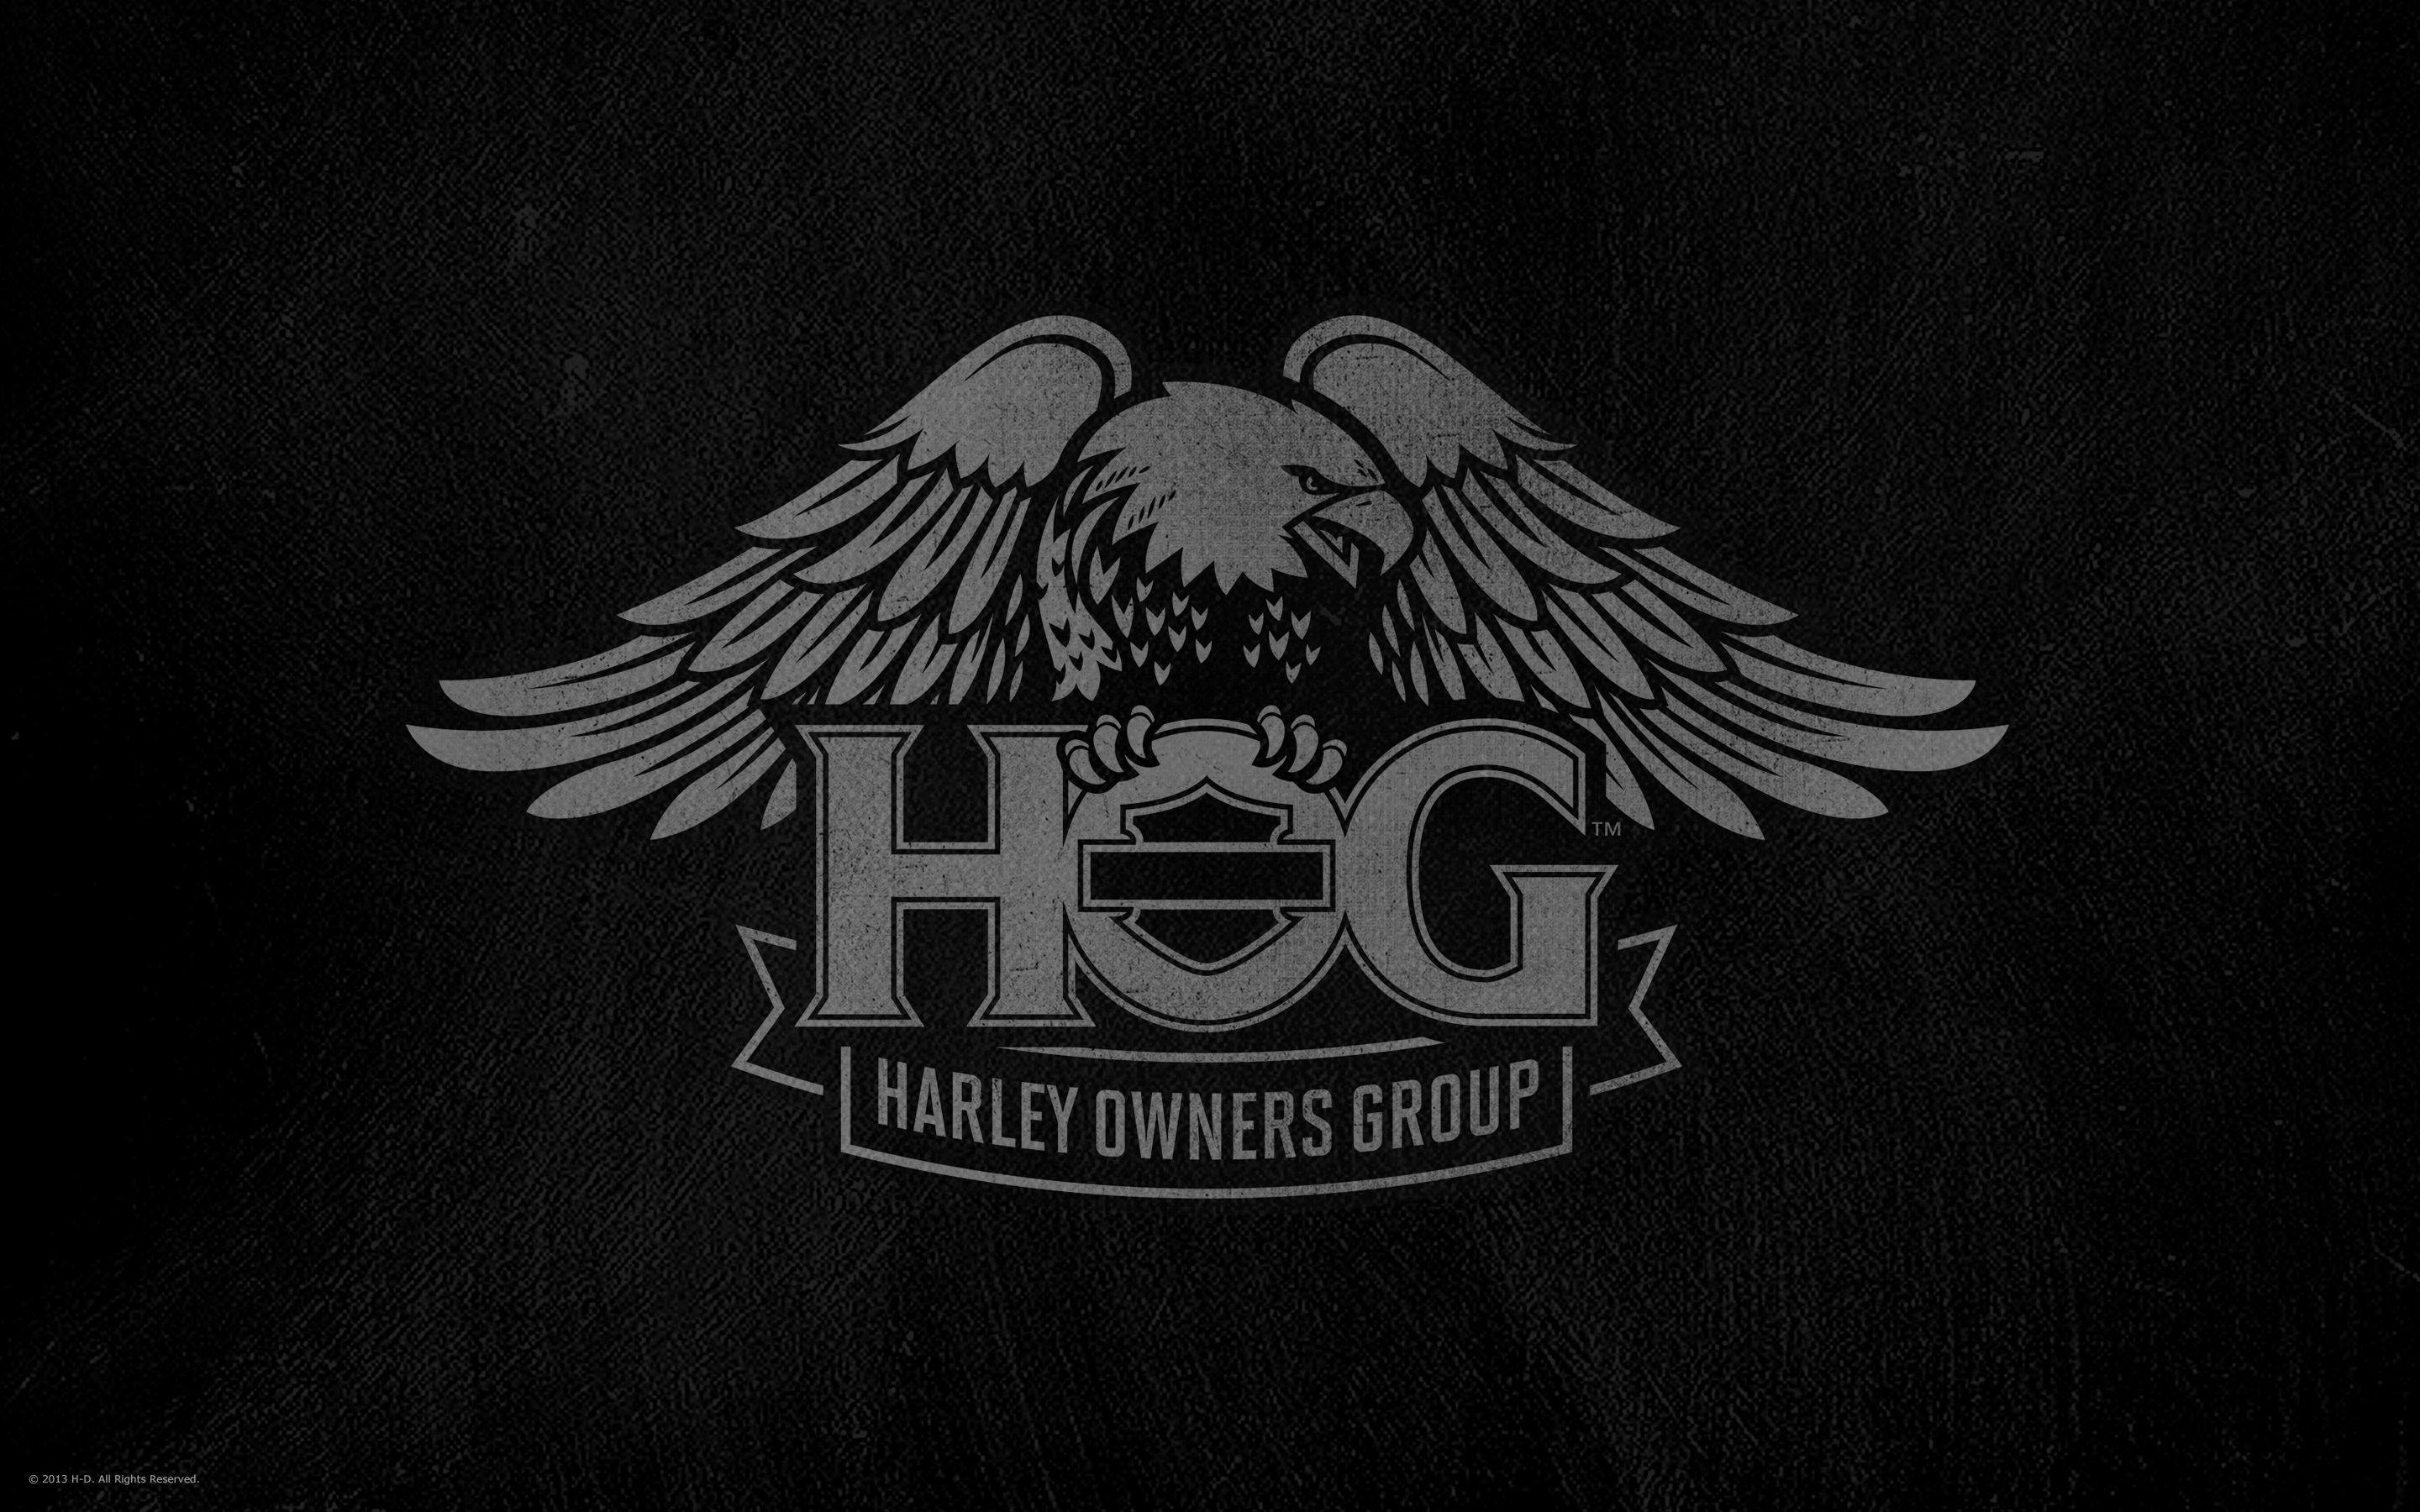 Hog перевод. Harley owners группа. Hog Харлей Дэвидсон. Harley Davidson owners Group. Эмблема Харлей Дэвидсон.